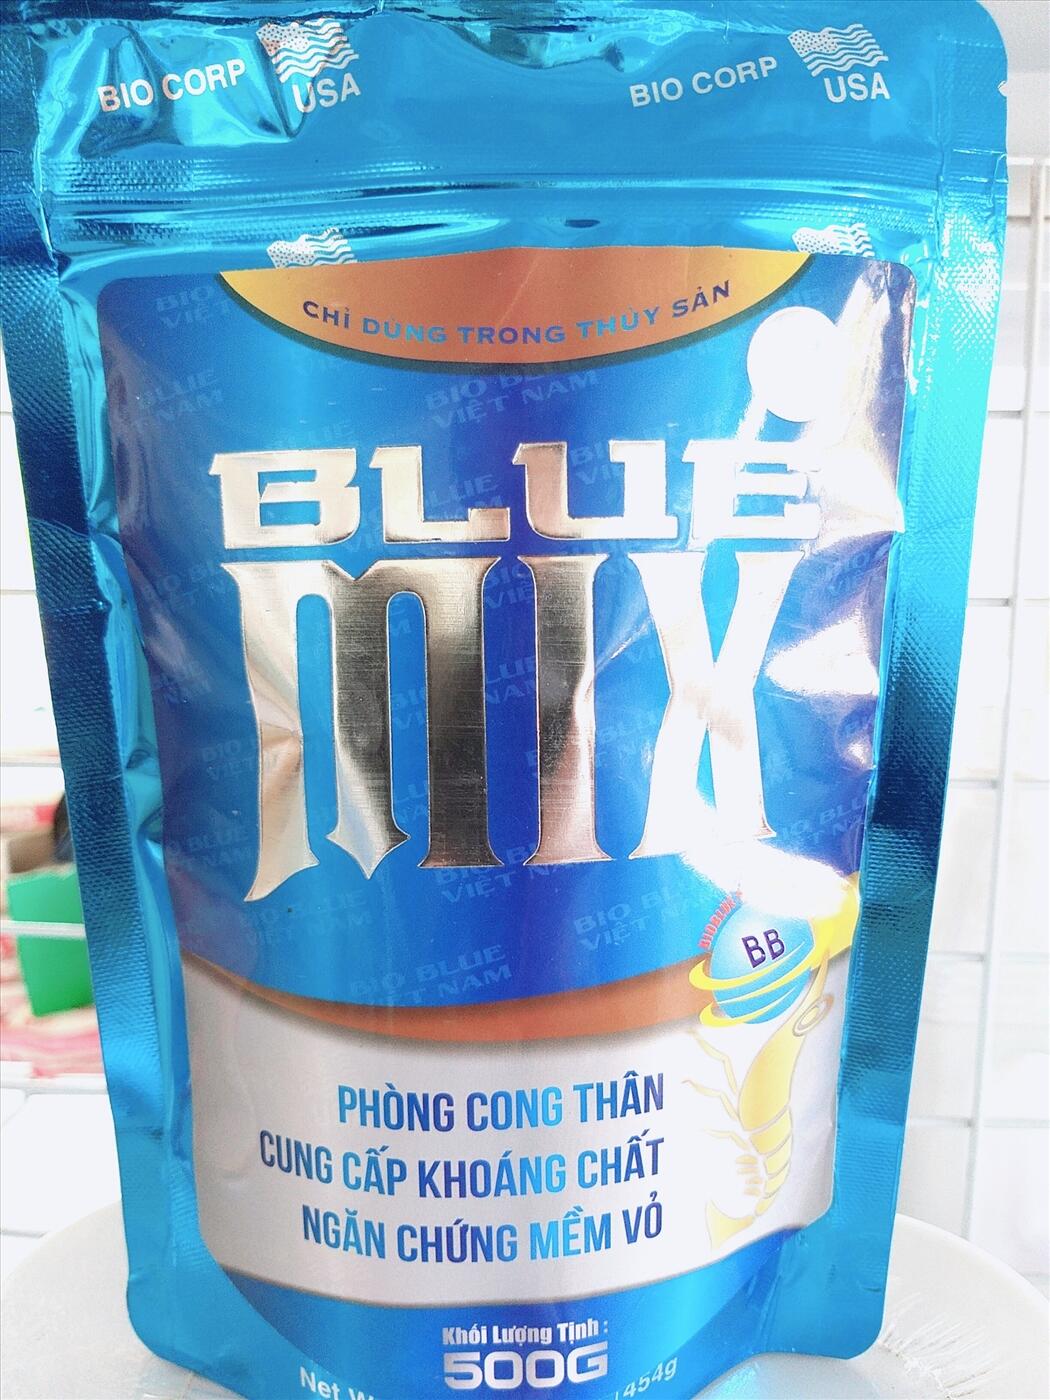 Blue Mix